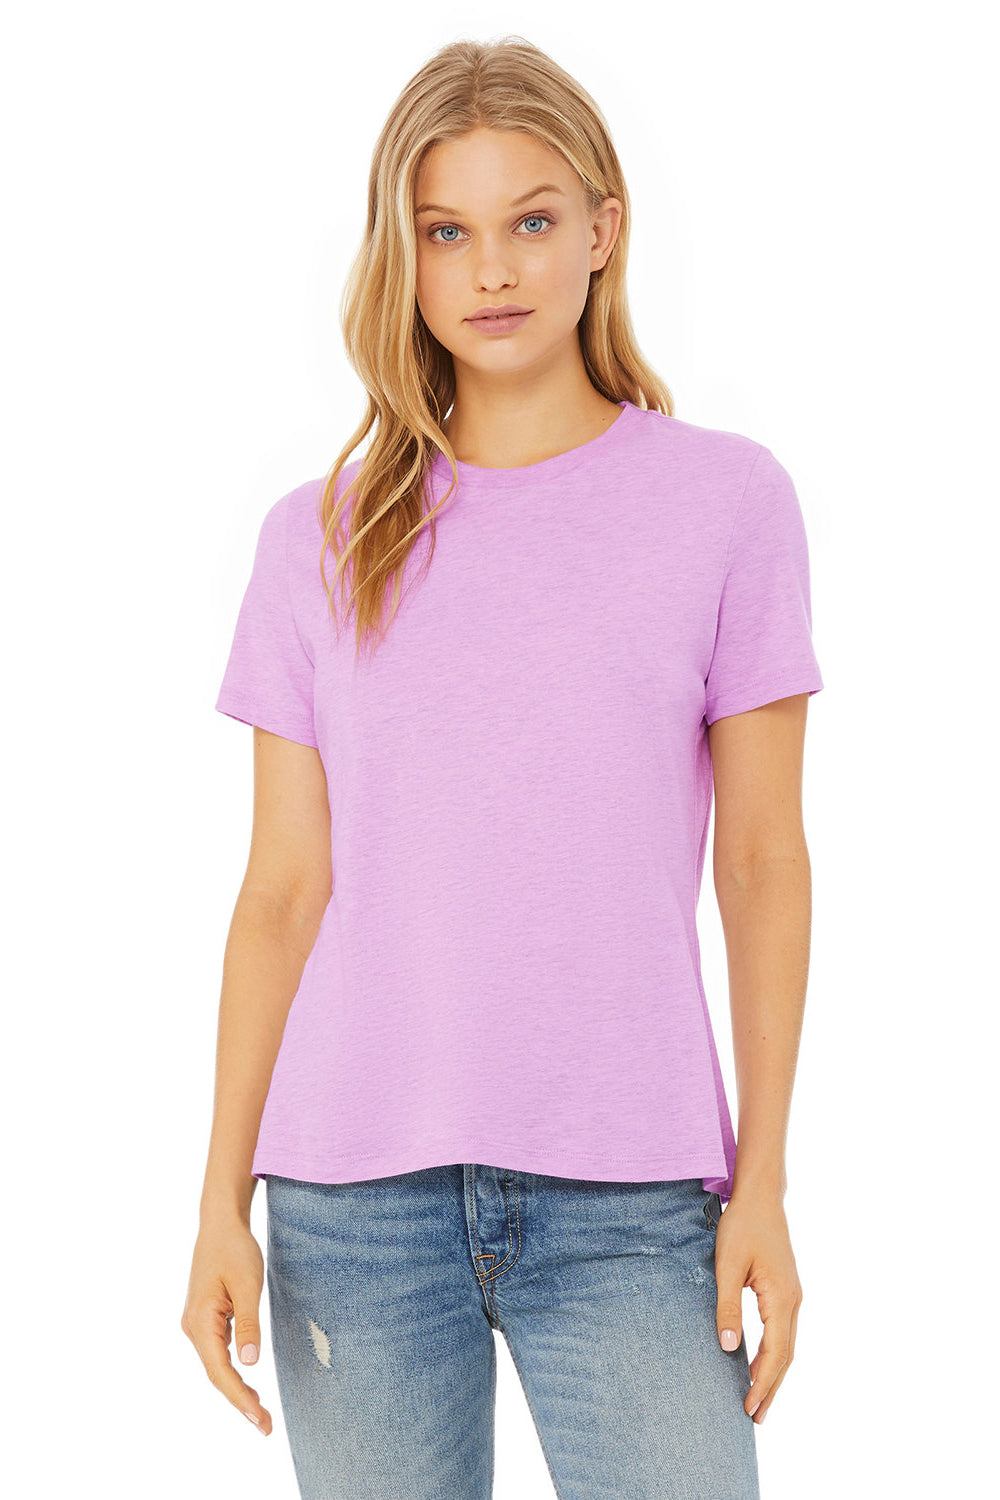 Bella + Canvas BC6400CVC/6400CVC Womens CVC Short Sleeve Crewneck T-Shirt Heather Prism Lilac Purple Model Back